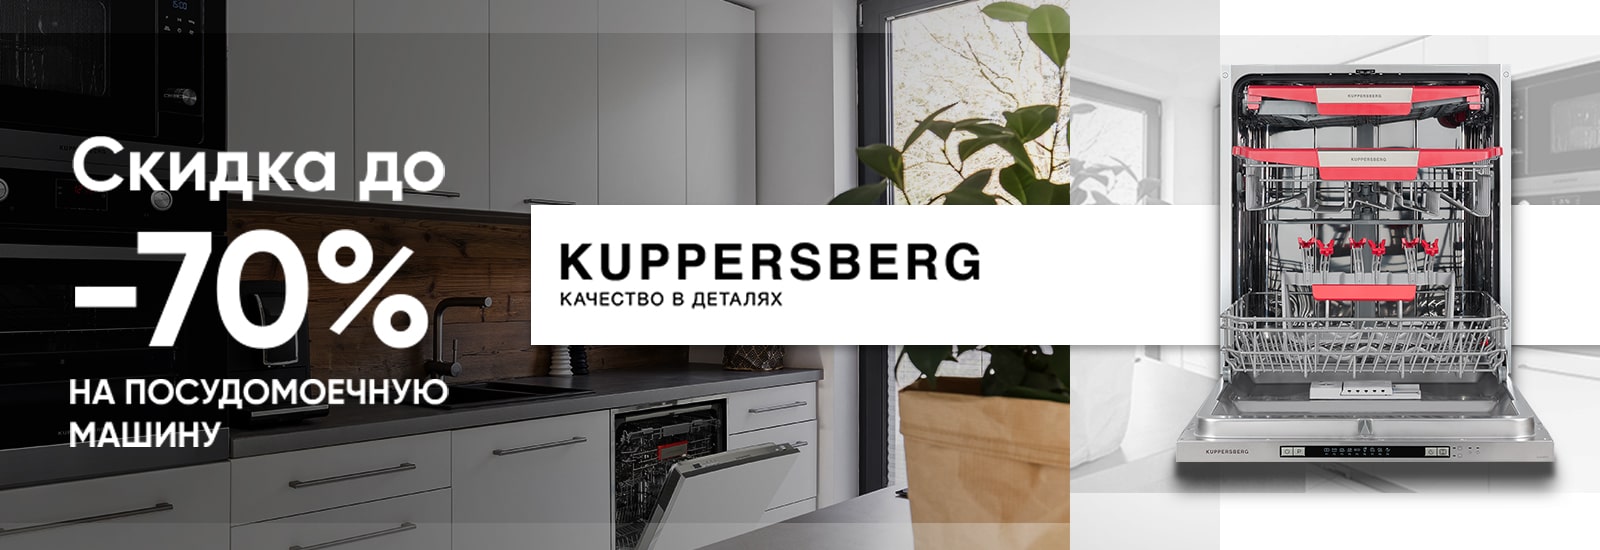 Скидки до 70% на посудомоечную машину Kuppersberg